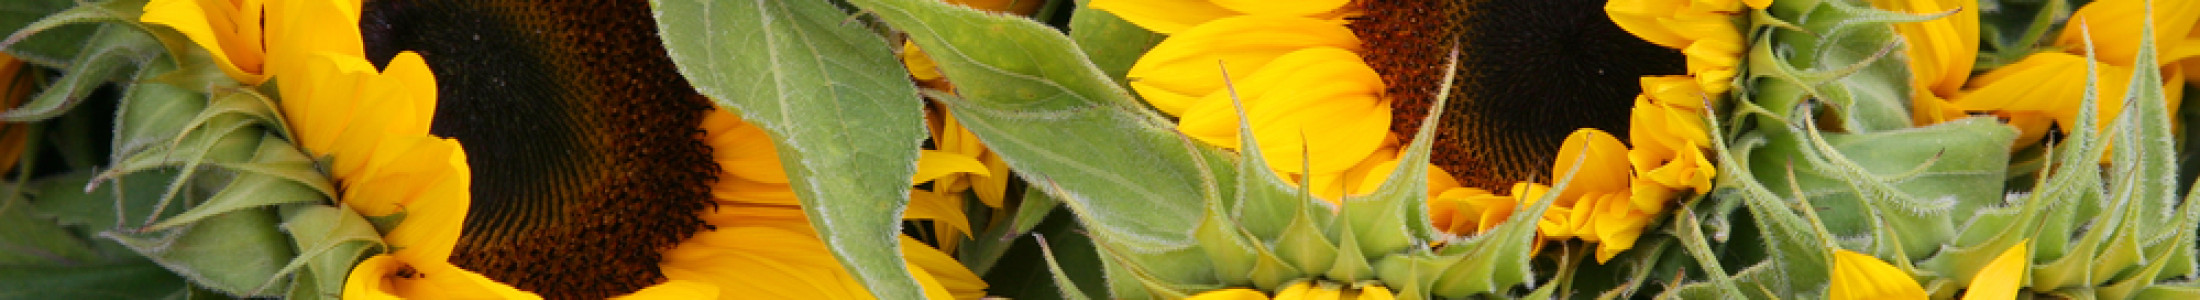 Sunflowers, Sunflower Bouquets